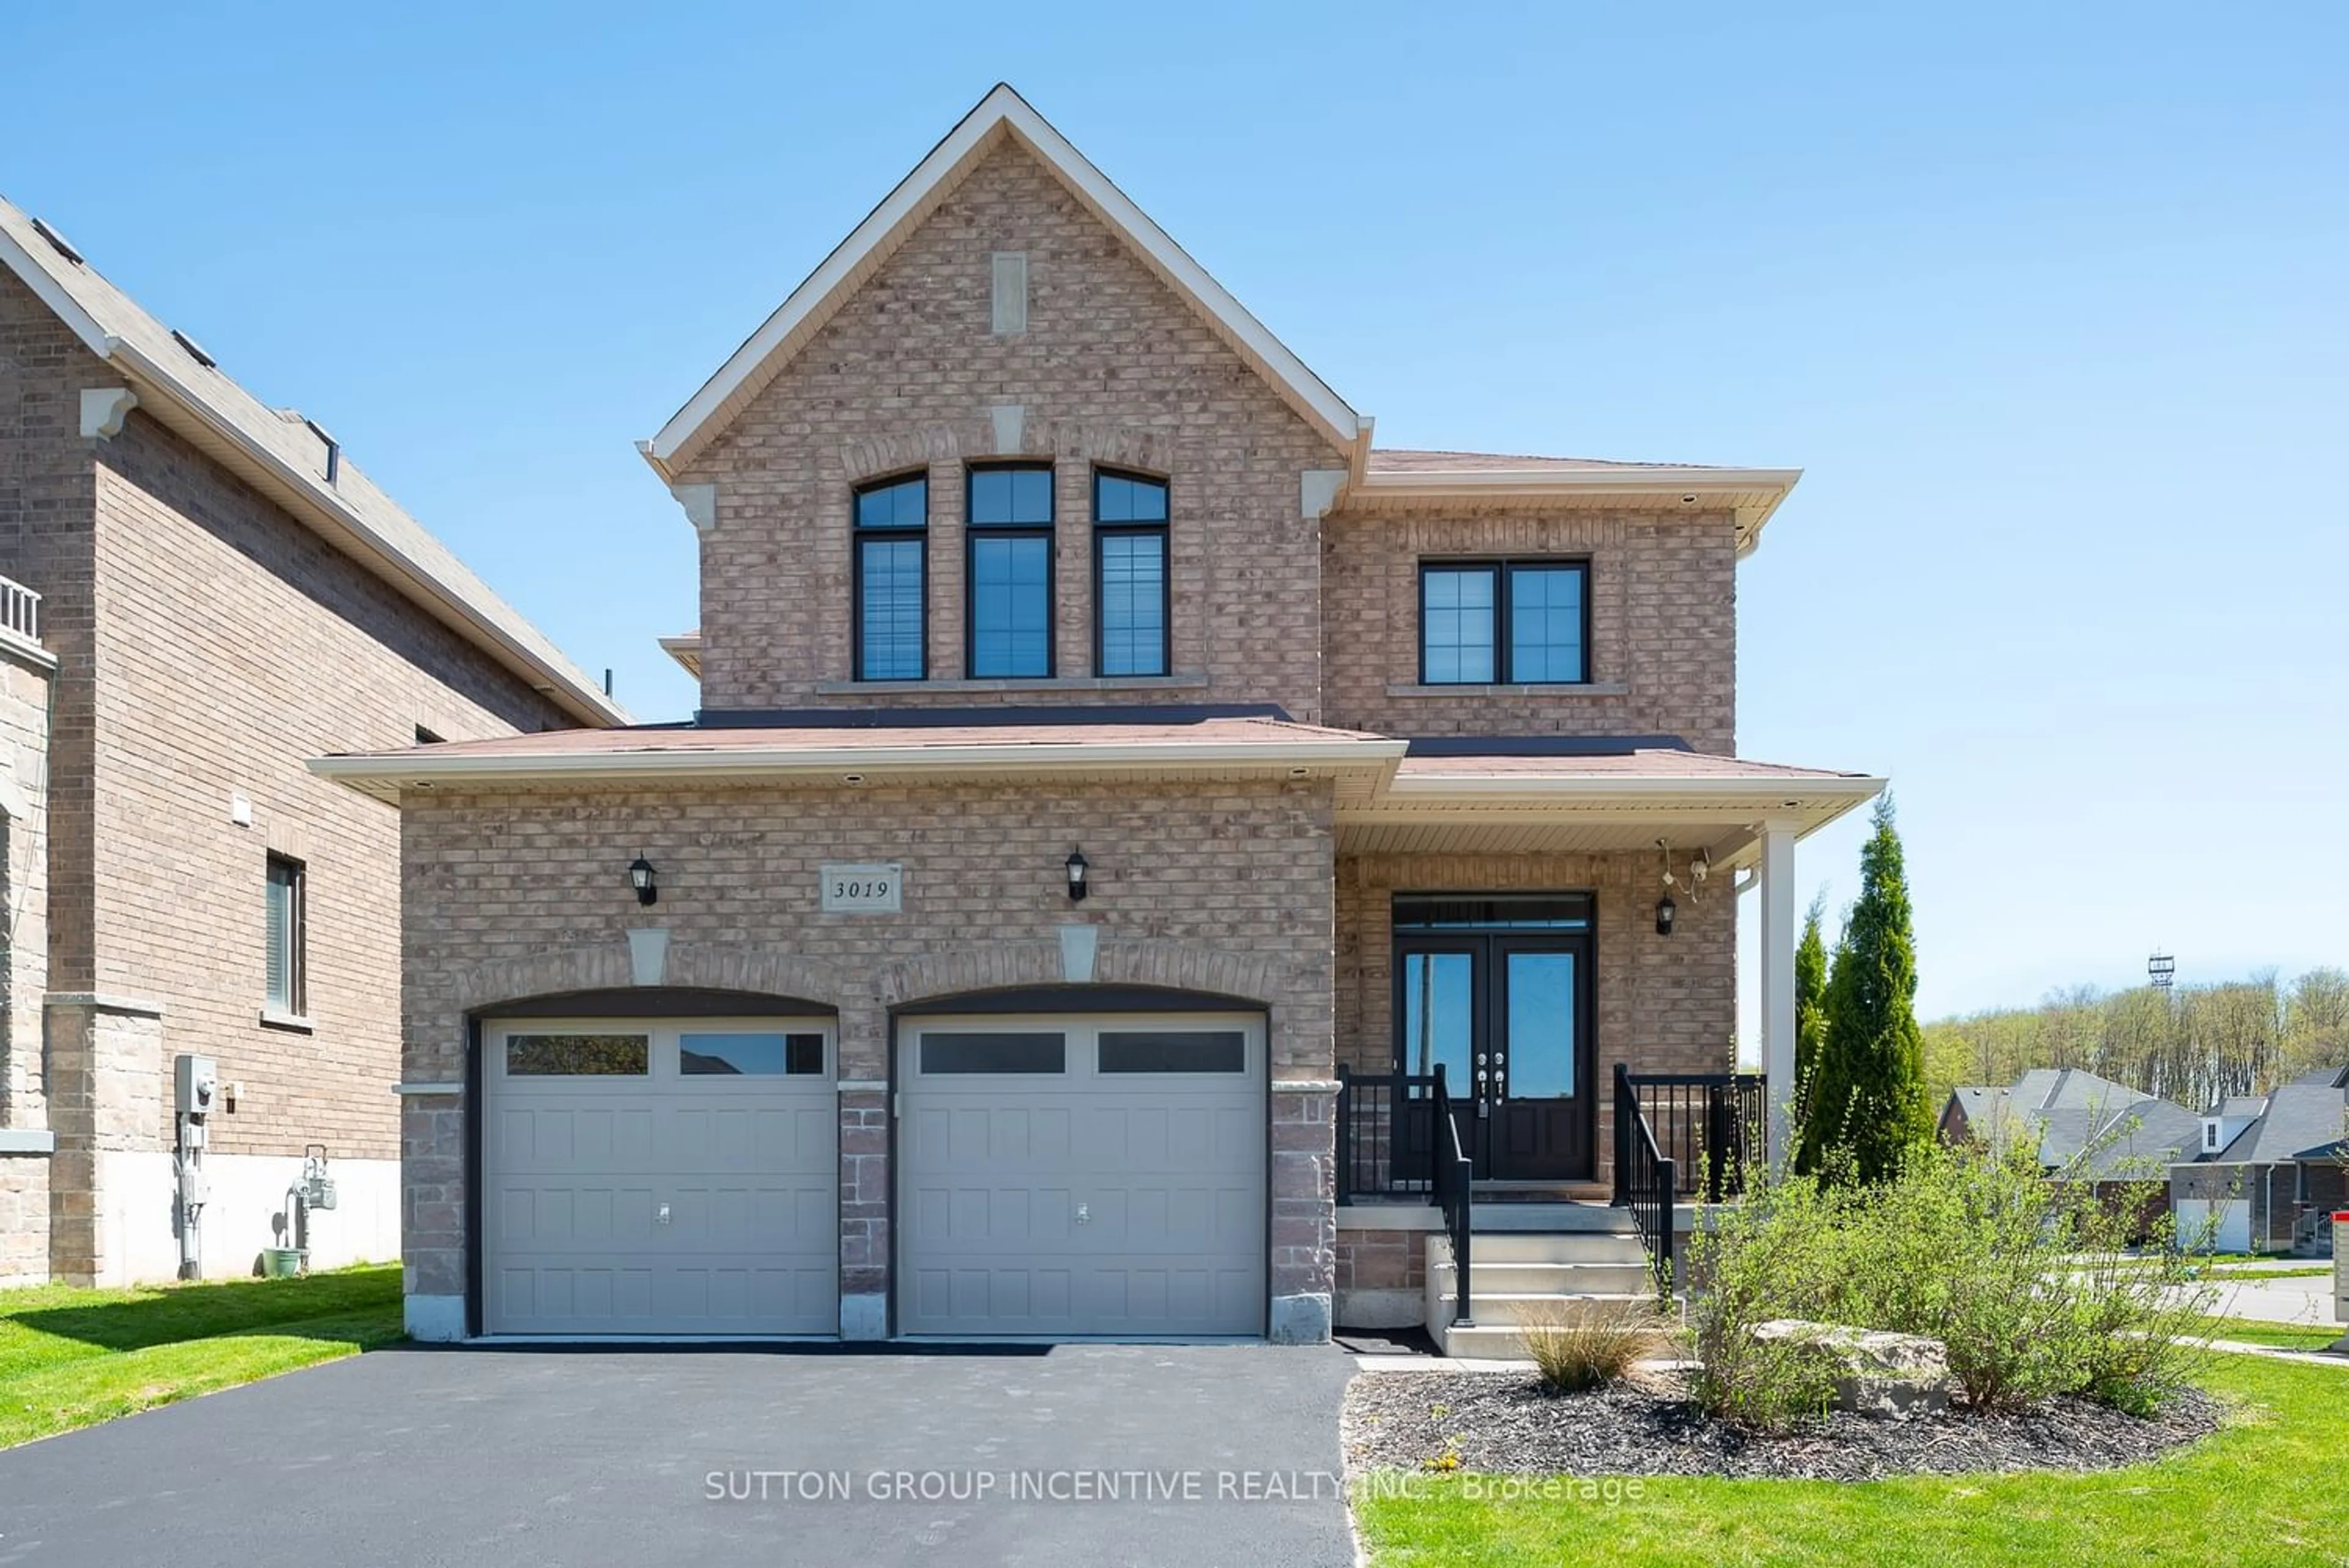 Home with brick exterior material for 3019 Orion Blvd, Orillia Ontario L3V 8J5